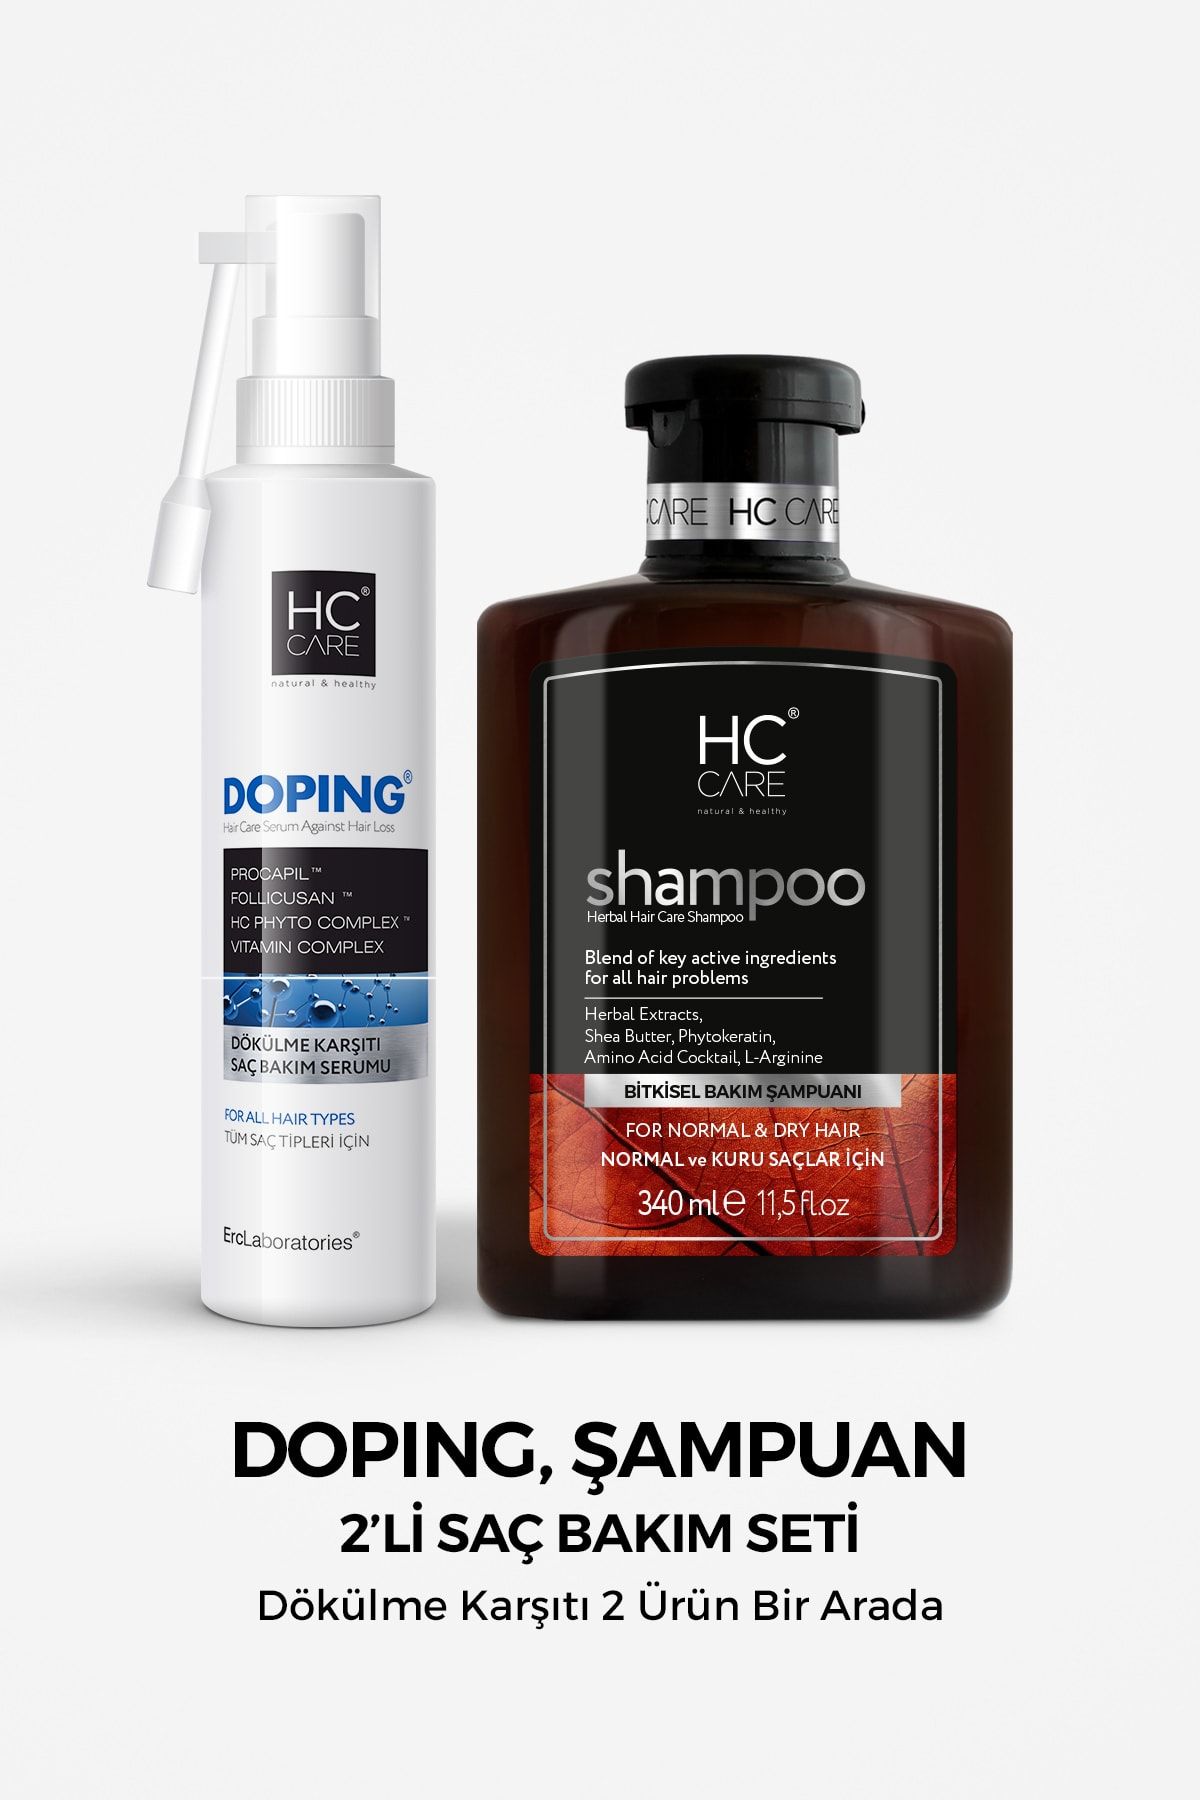 HC Care Doping, Şampuan Saç Bakım Seti 2'li